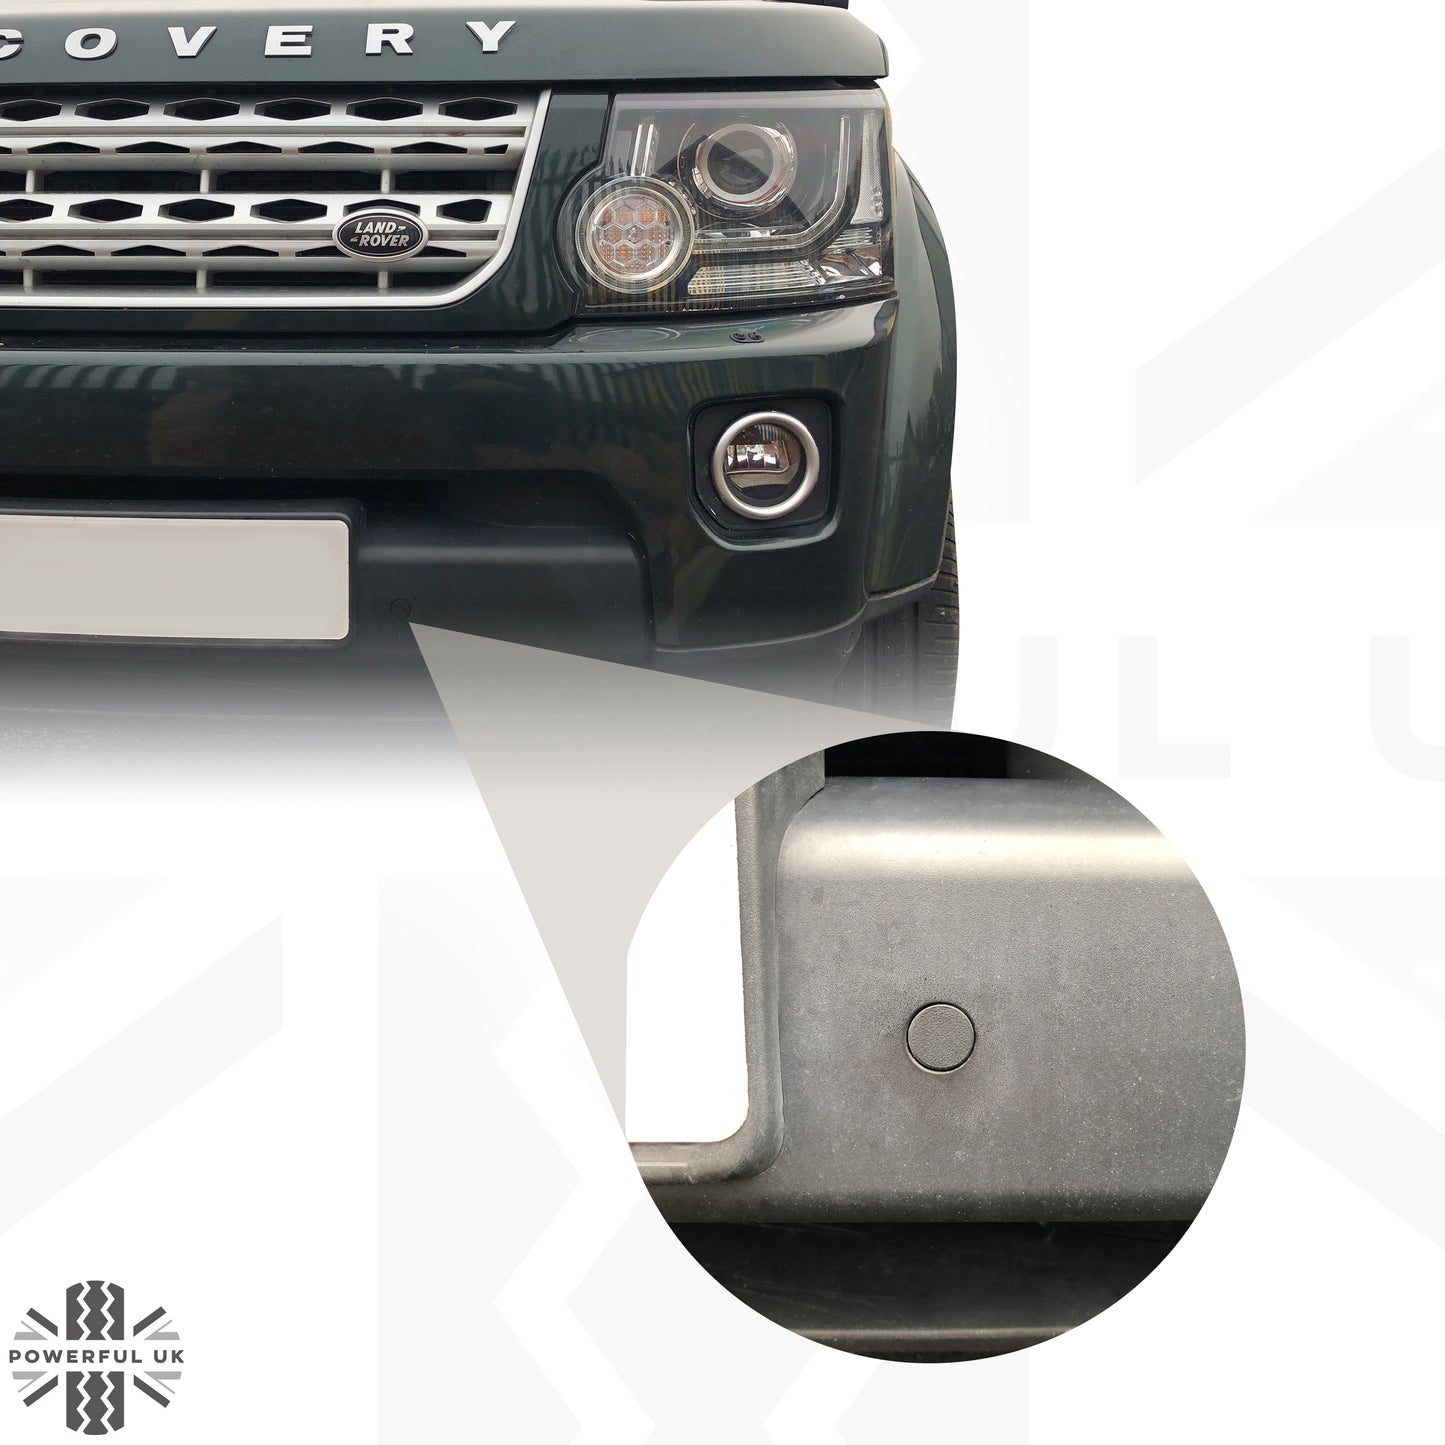 16mm Parking Sensor Cover Stickers x8 for Jaguar